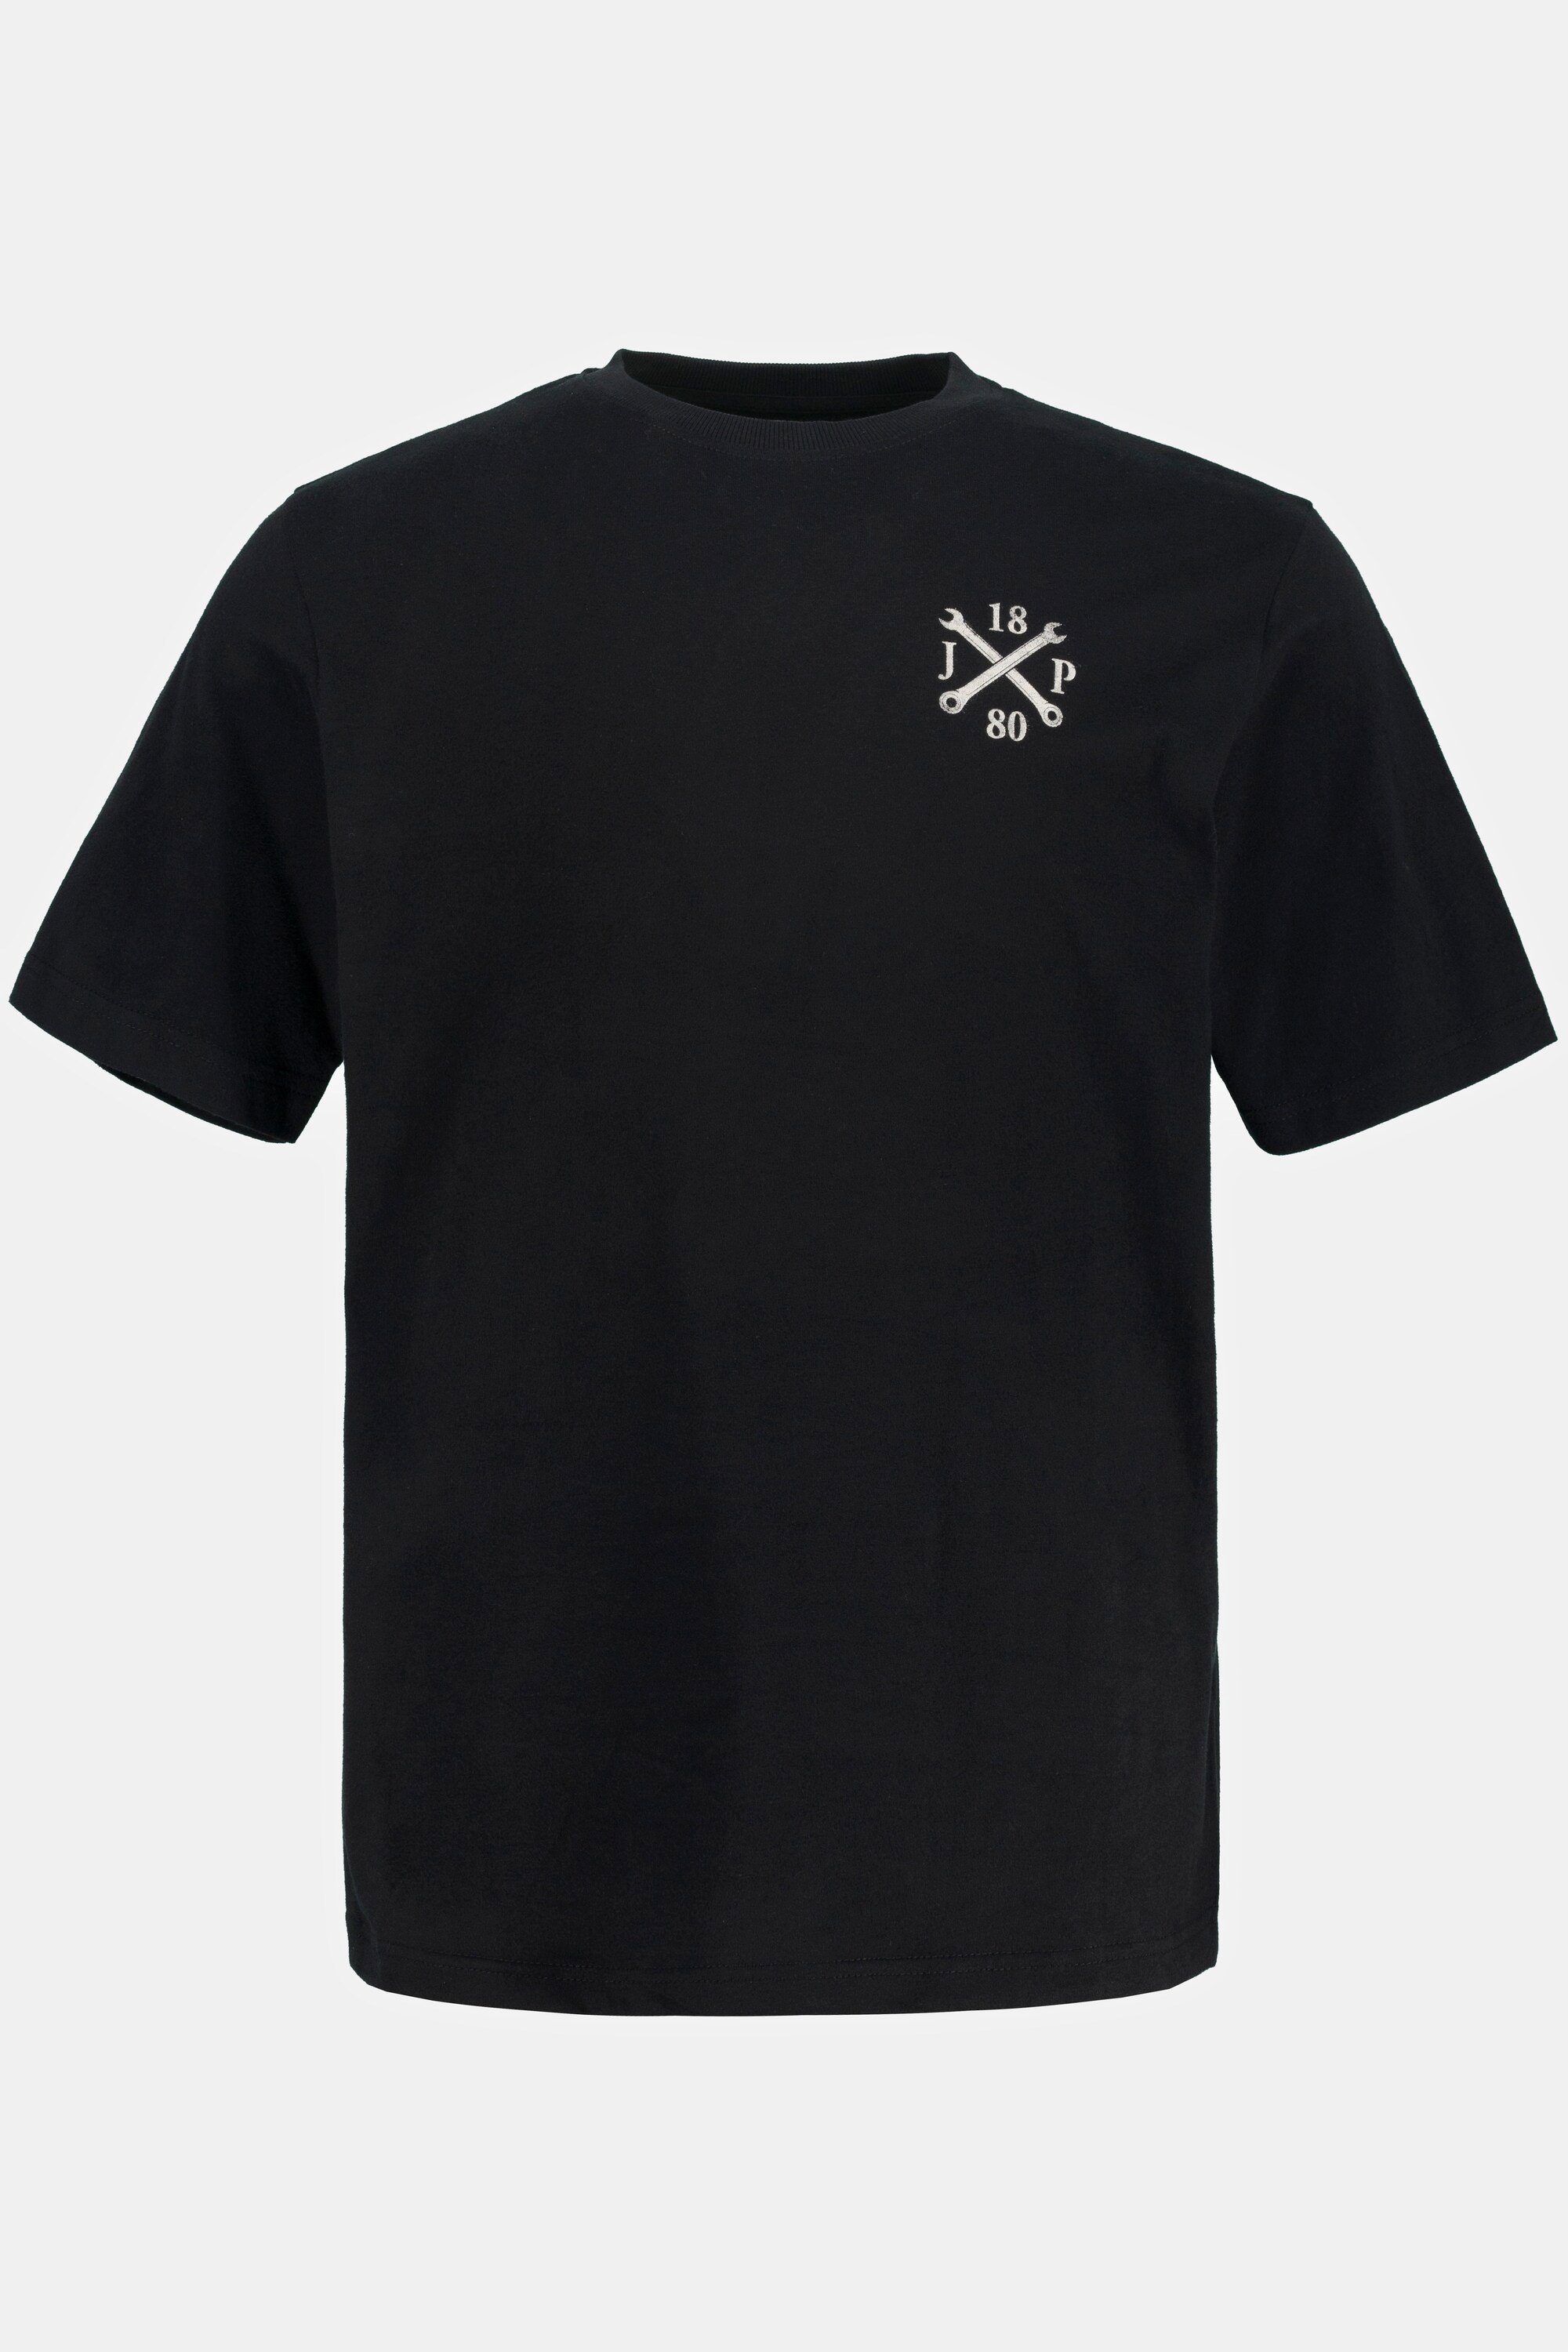 Print JP1880 Rücken Rundhals T-Shirt T-Shirt Halbarm